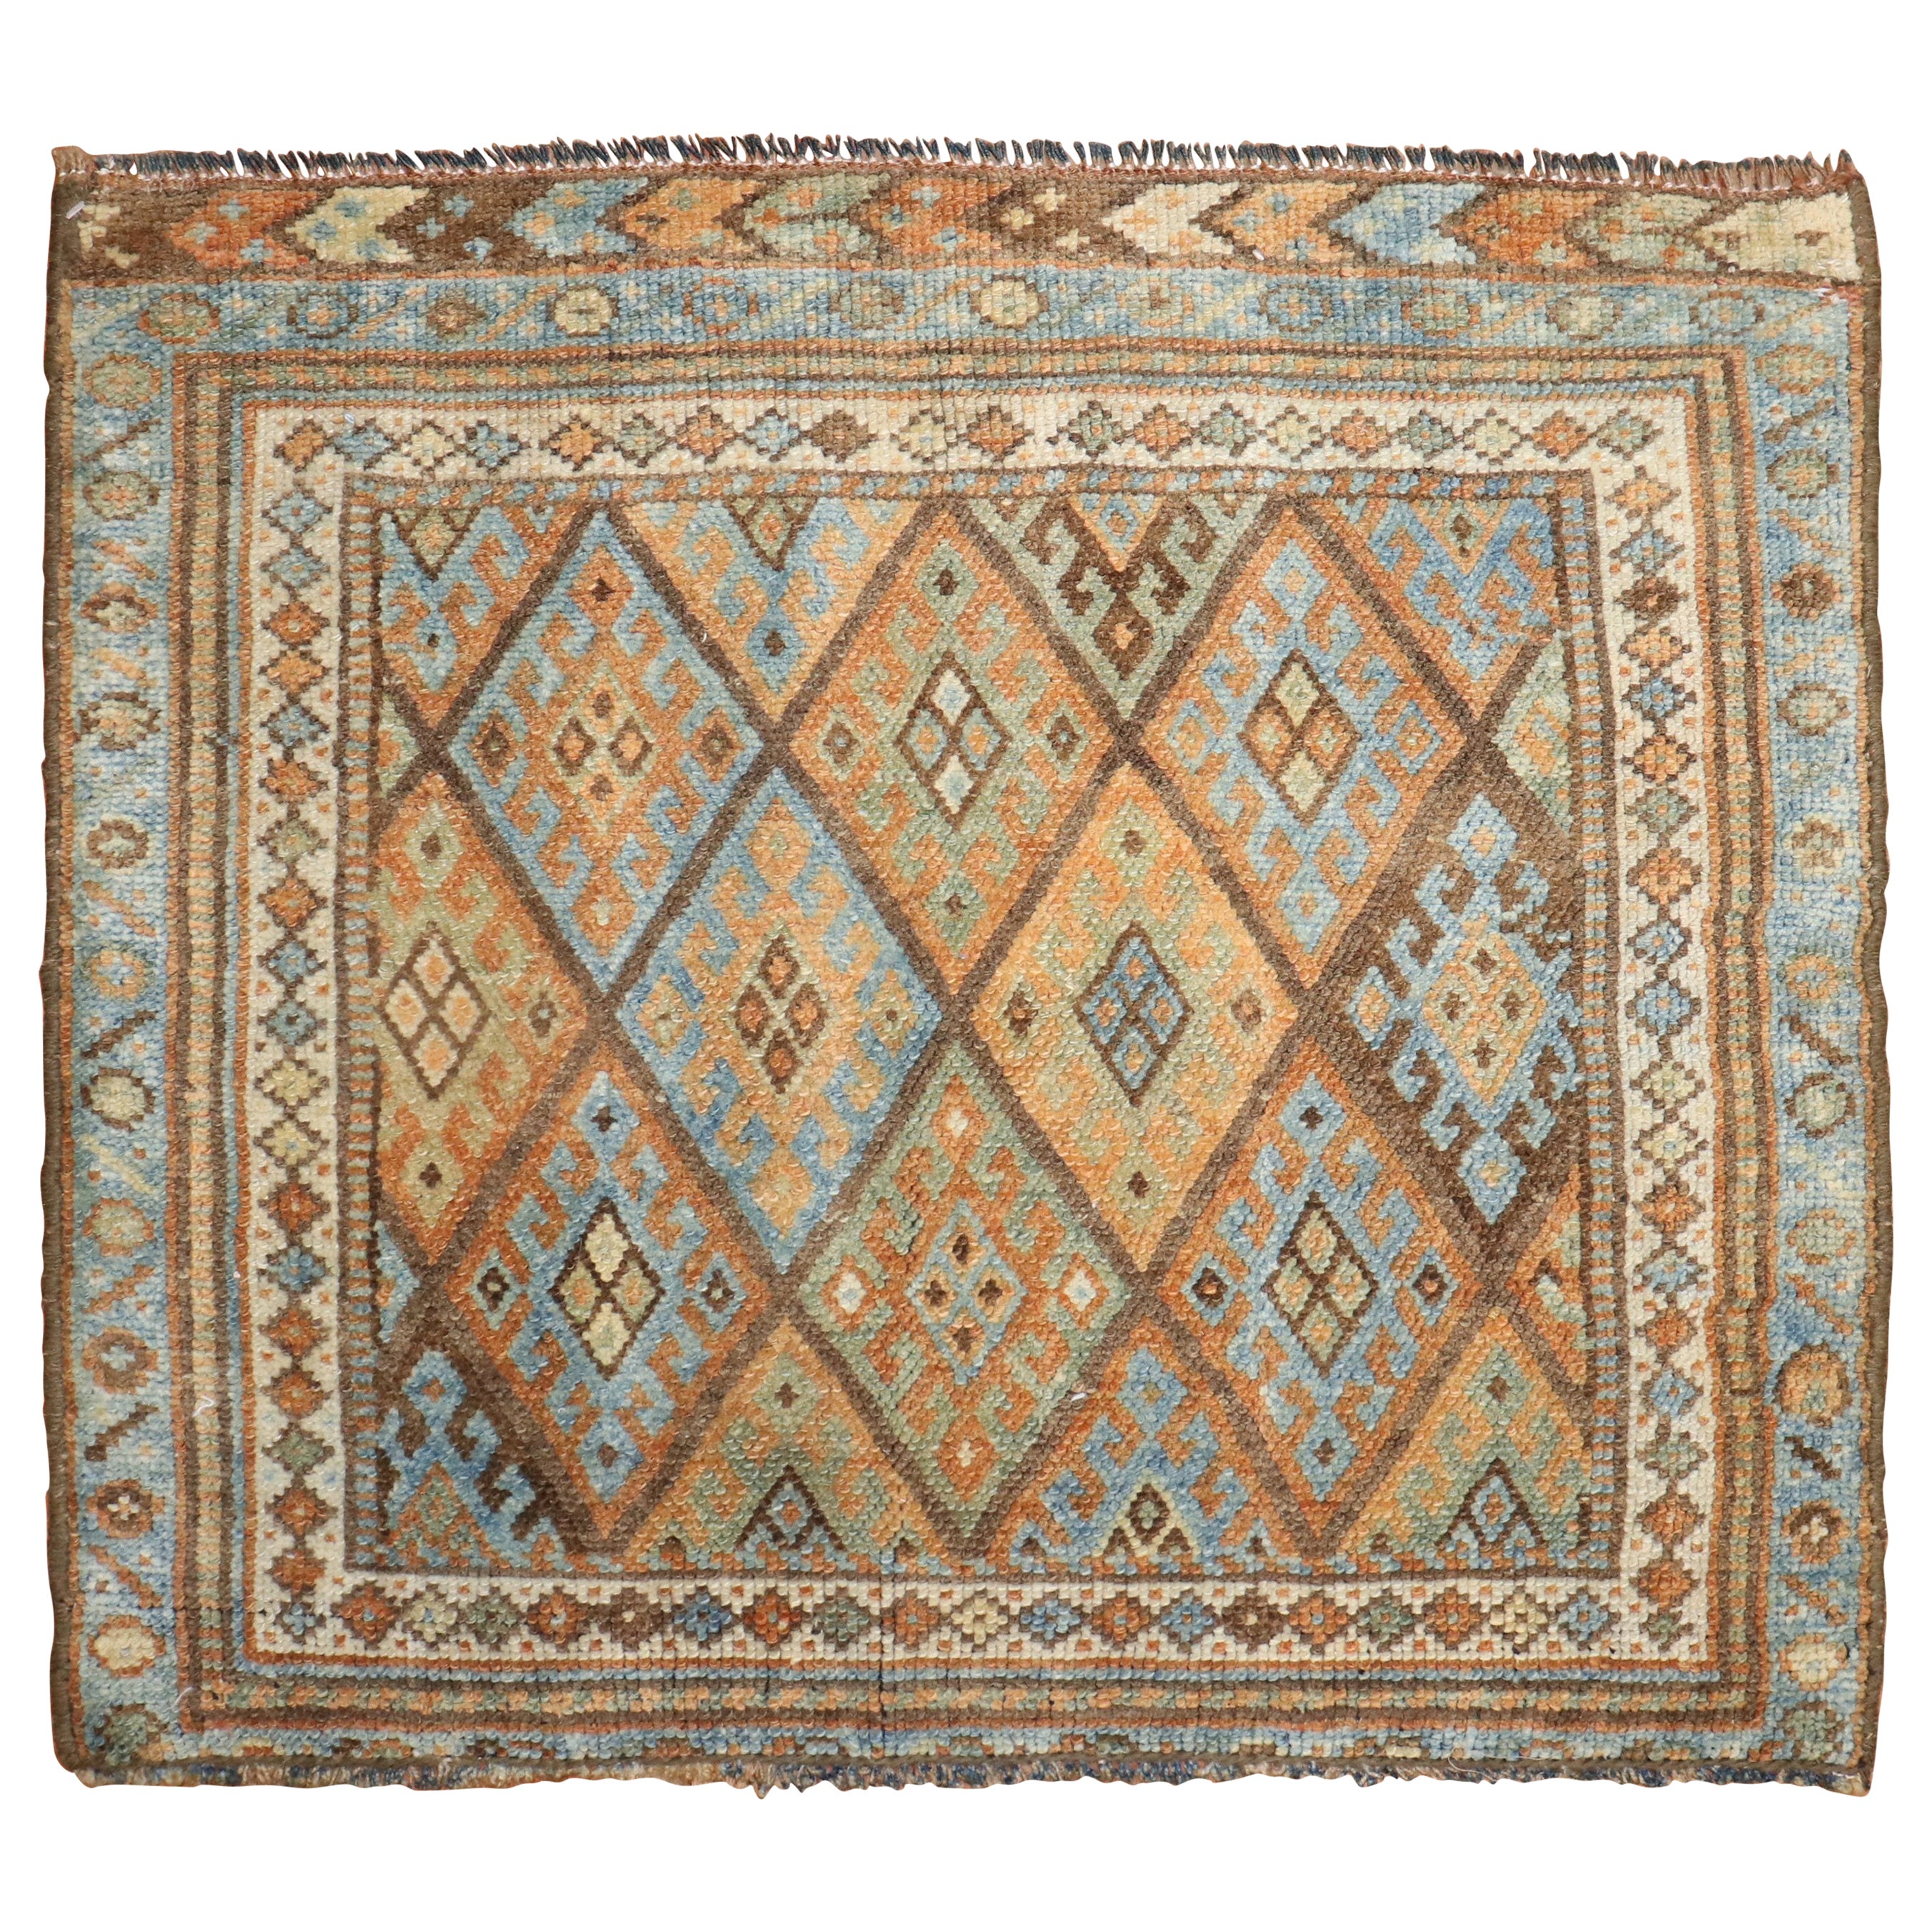 Zabihi Kollektion Stammeskunst Jaff Kurd Mini-Teppich aus dem frühen 20. Jahrhundert